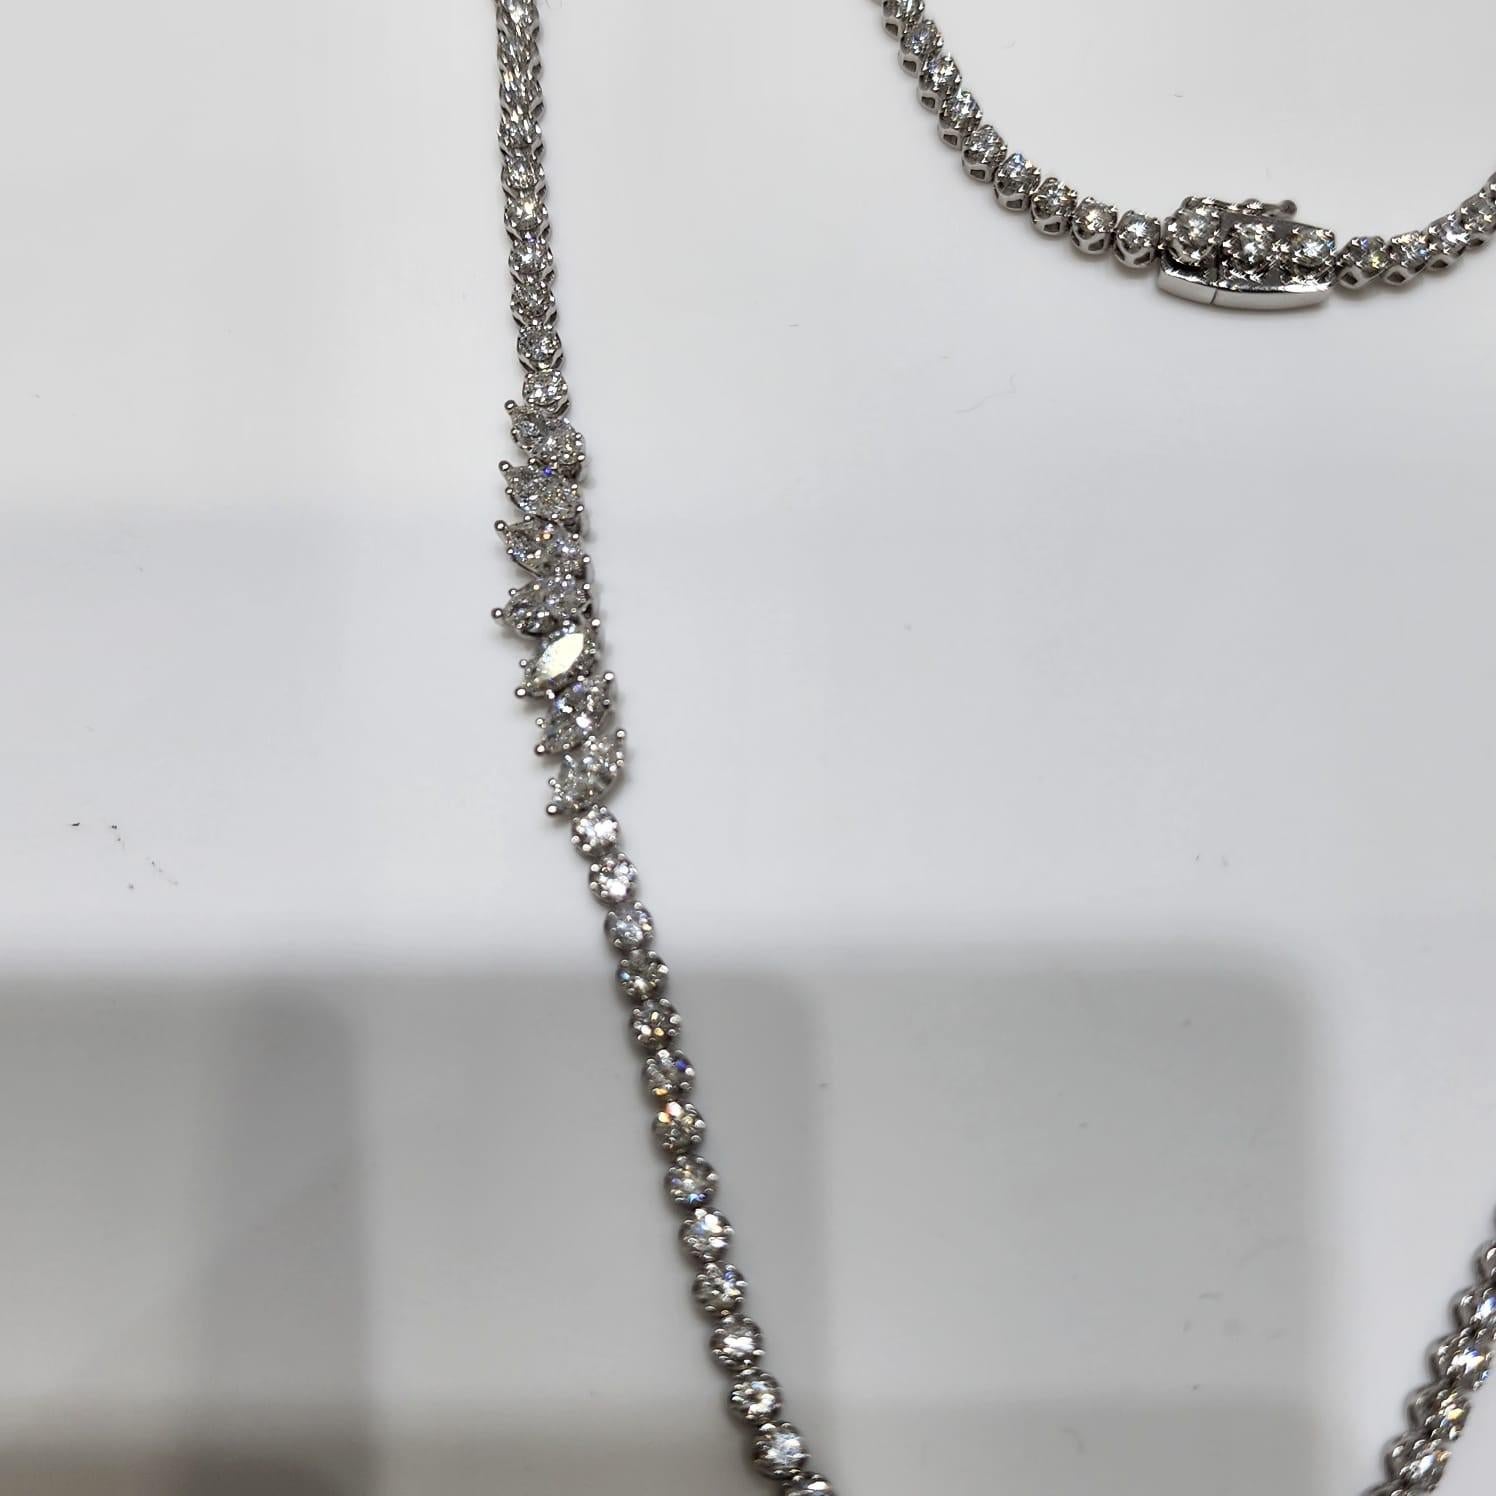 8.61 Carat Burma Ruby Diamond Necklace in 18 Karat White Gold For Sale 3